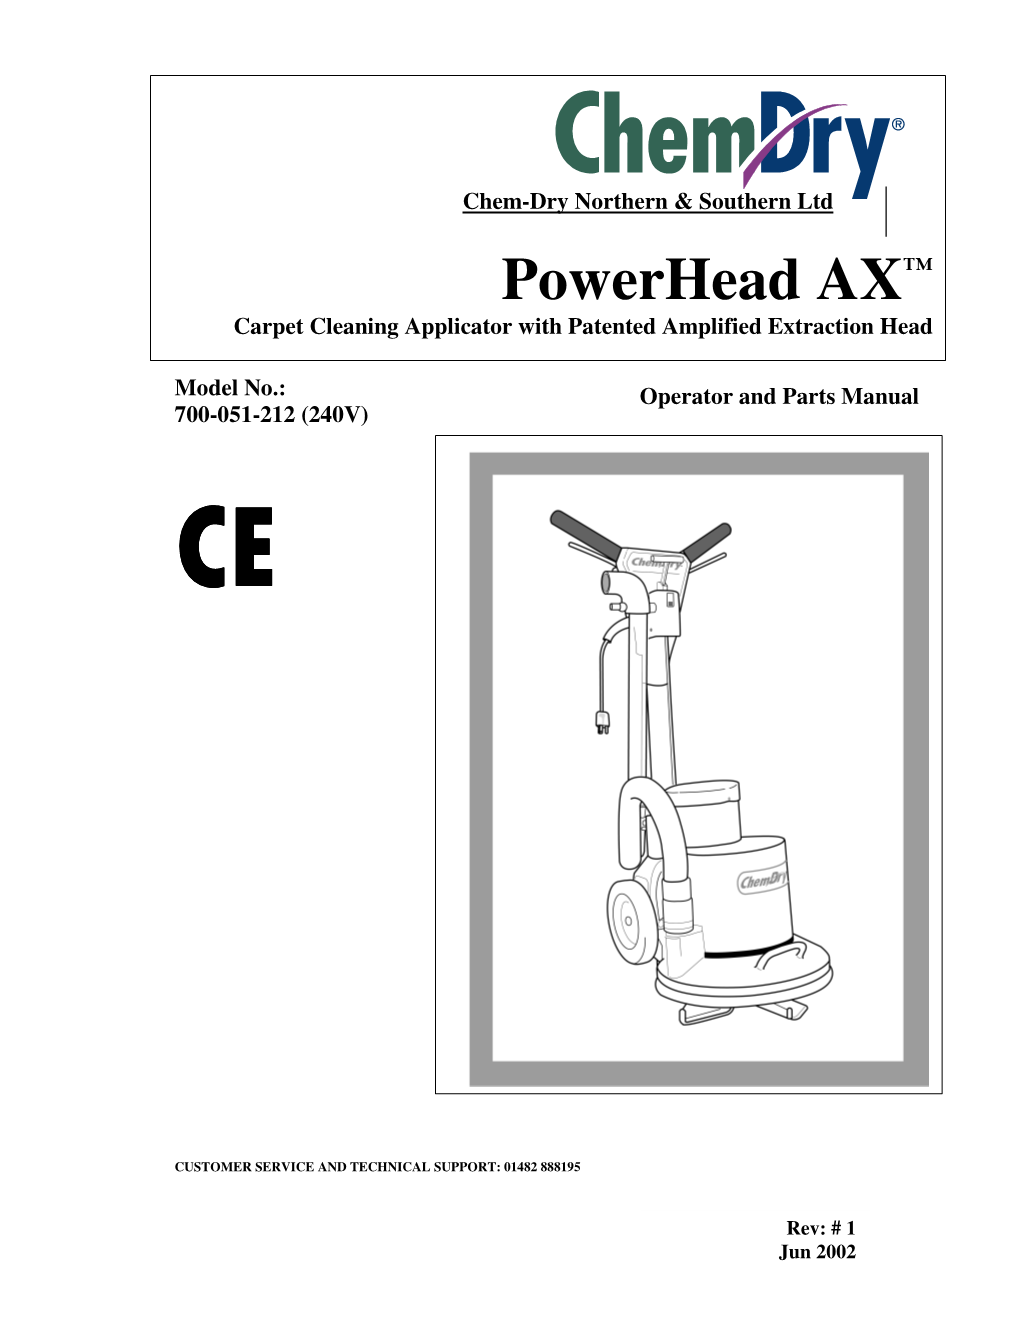 Chem-Dry Powerhead AX™